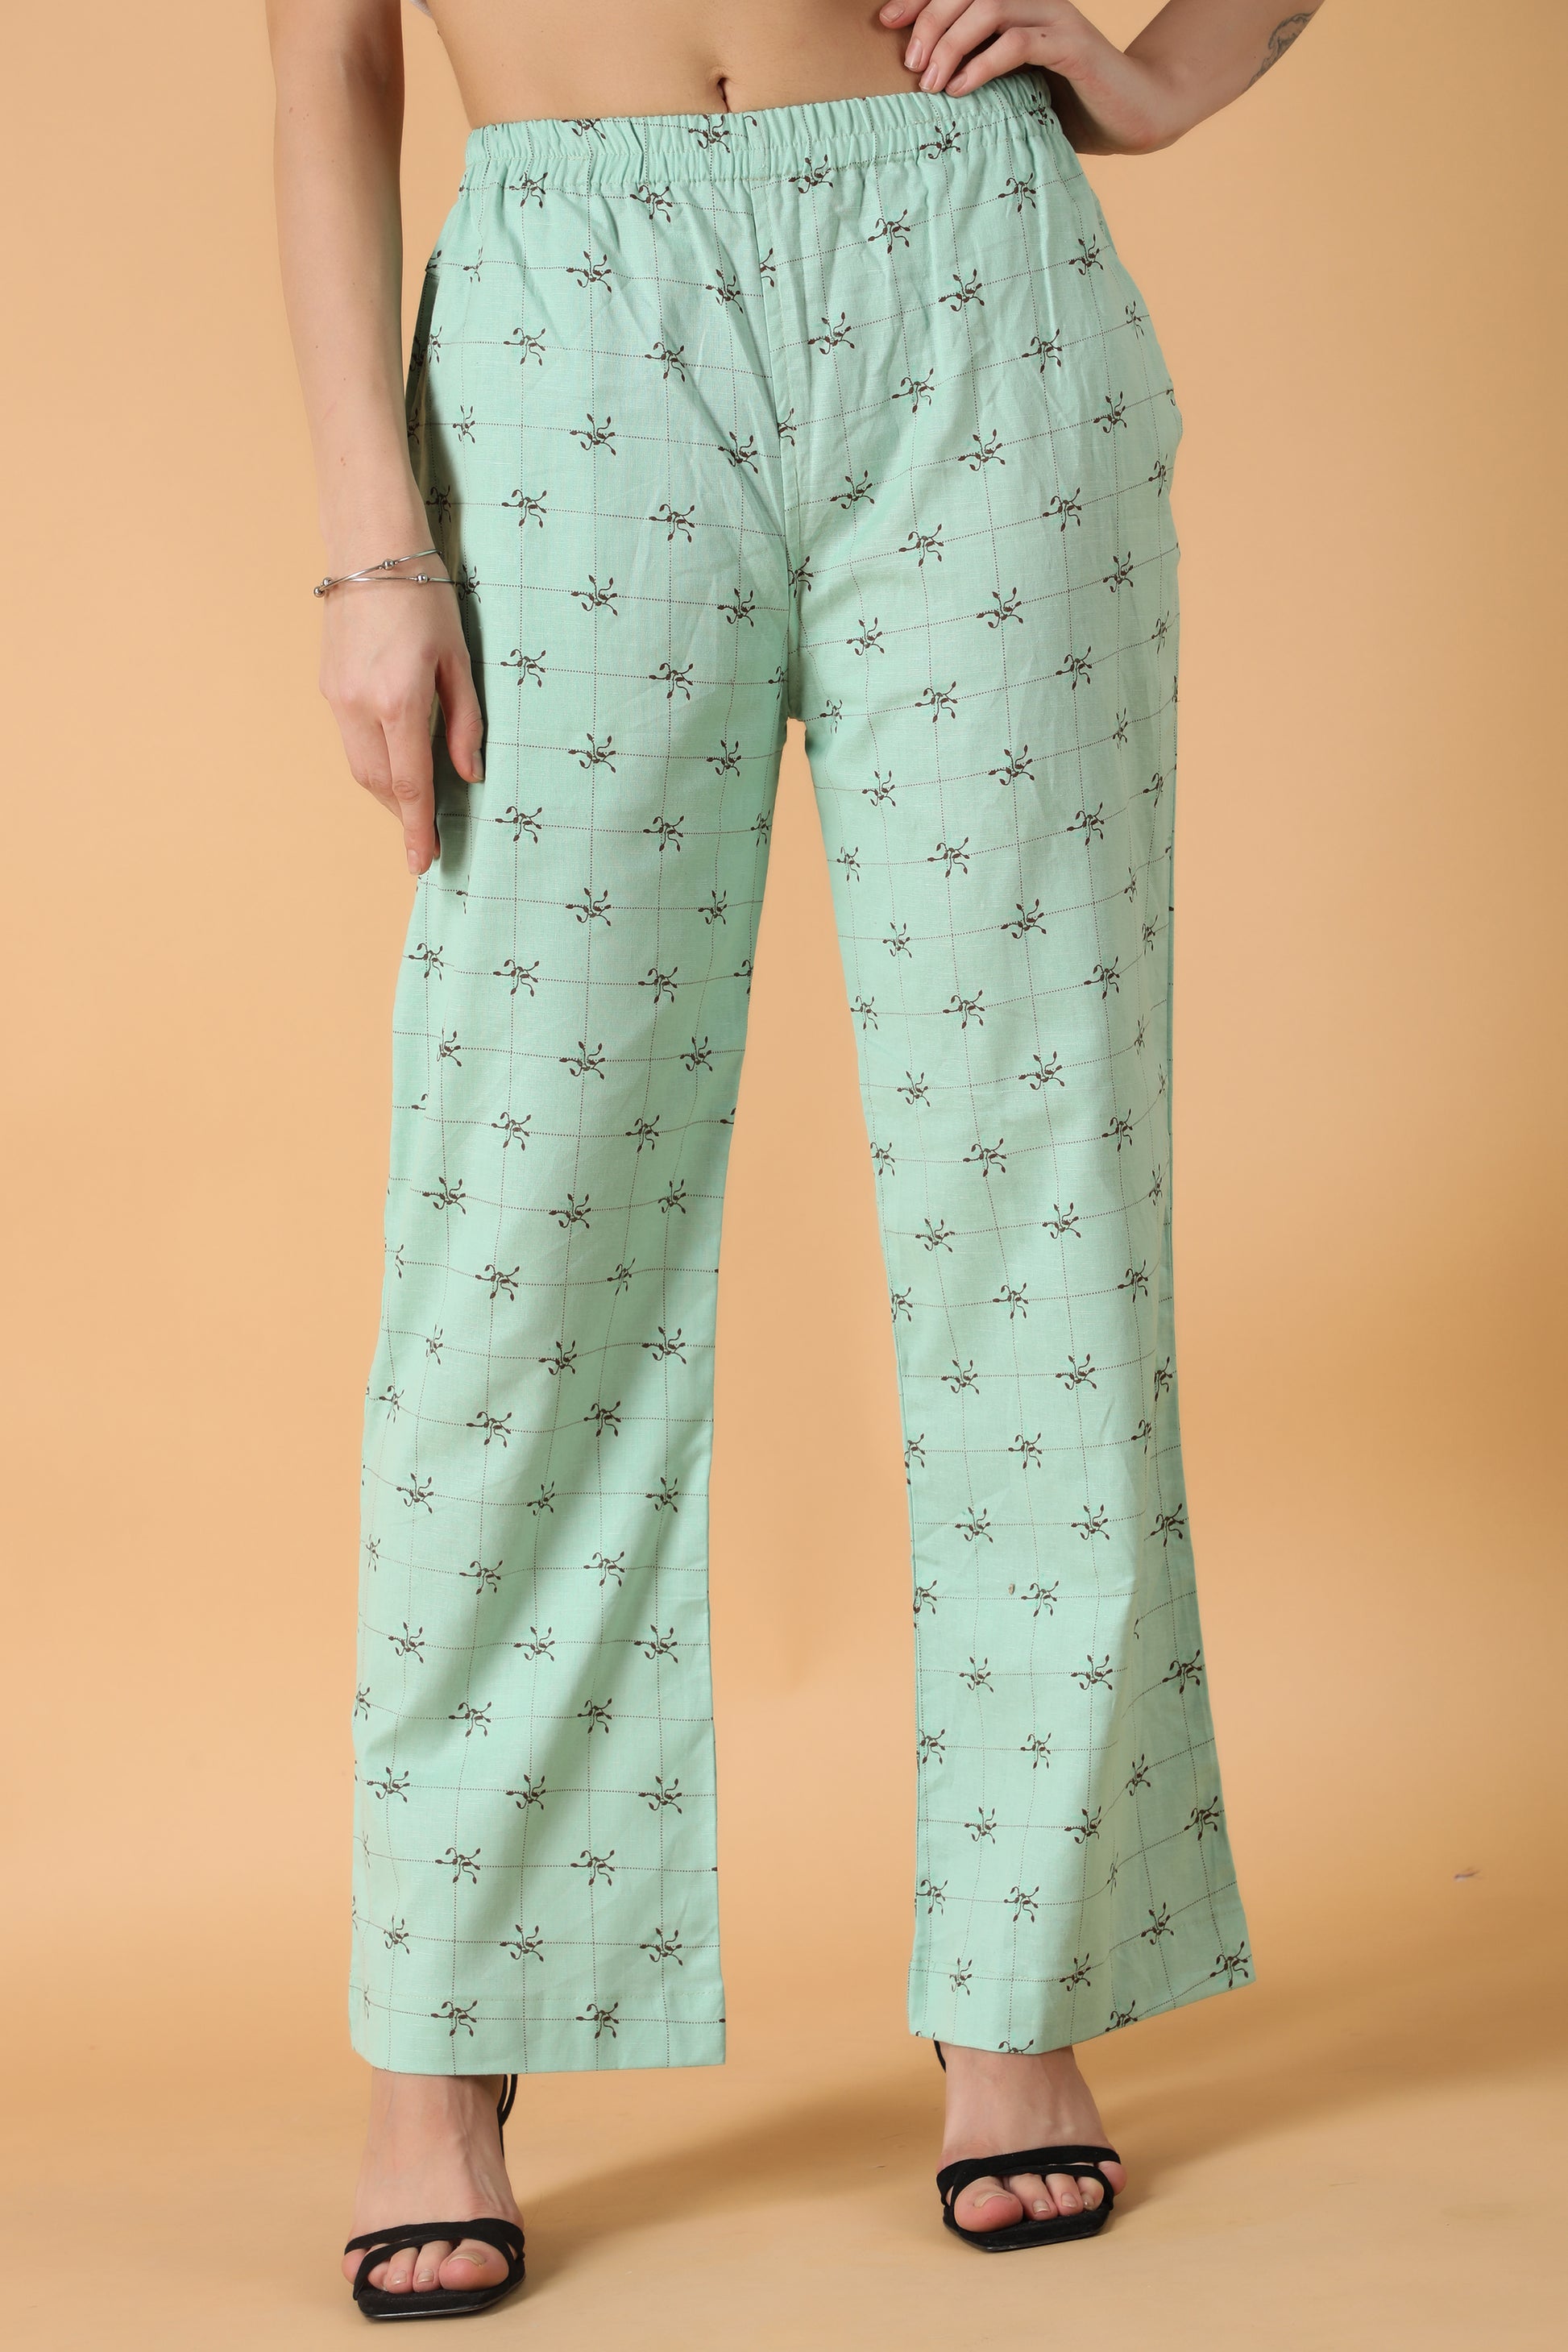 All Size, Chic Pajama, Cotton, Cotton Pajama, Double Side Pockets, Dual Side Pockets, Full Elasticized Waistline, Light Self Print, Mint Color, Mint Color Pajama, Mint Cotton Pajama, Plus Siz